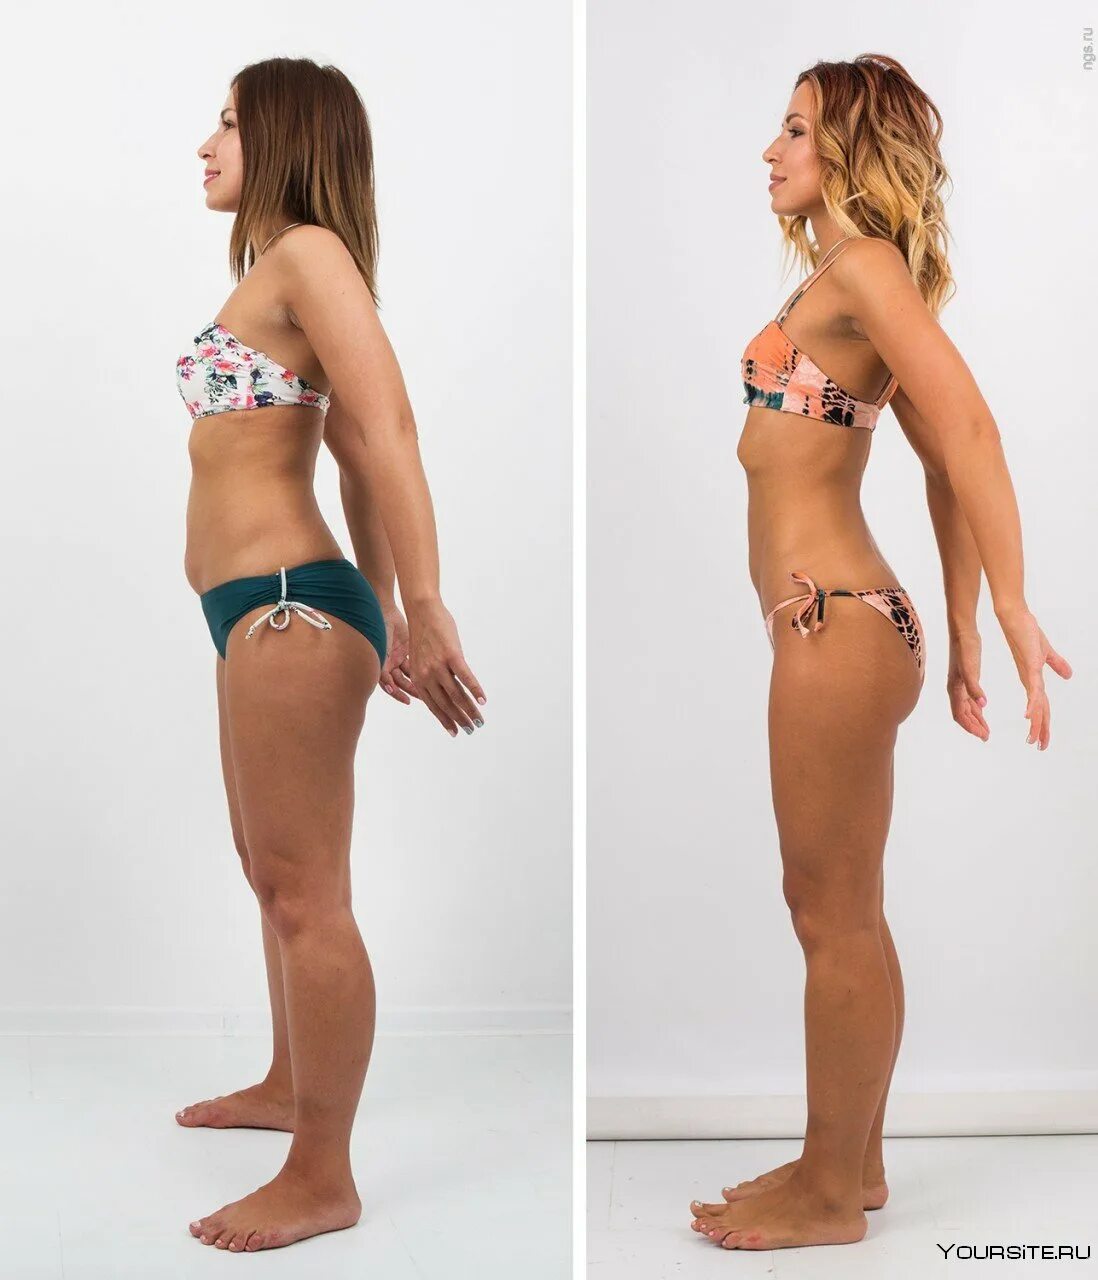 Фигура до и после. Преображение фигуры до и после. Фитнес до и после. Фотосессия до после фитнес.